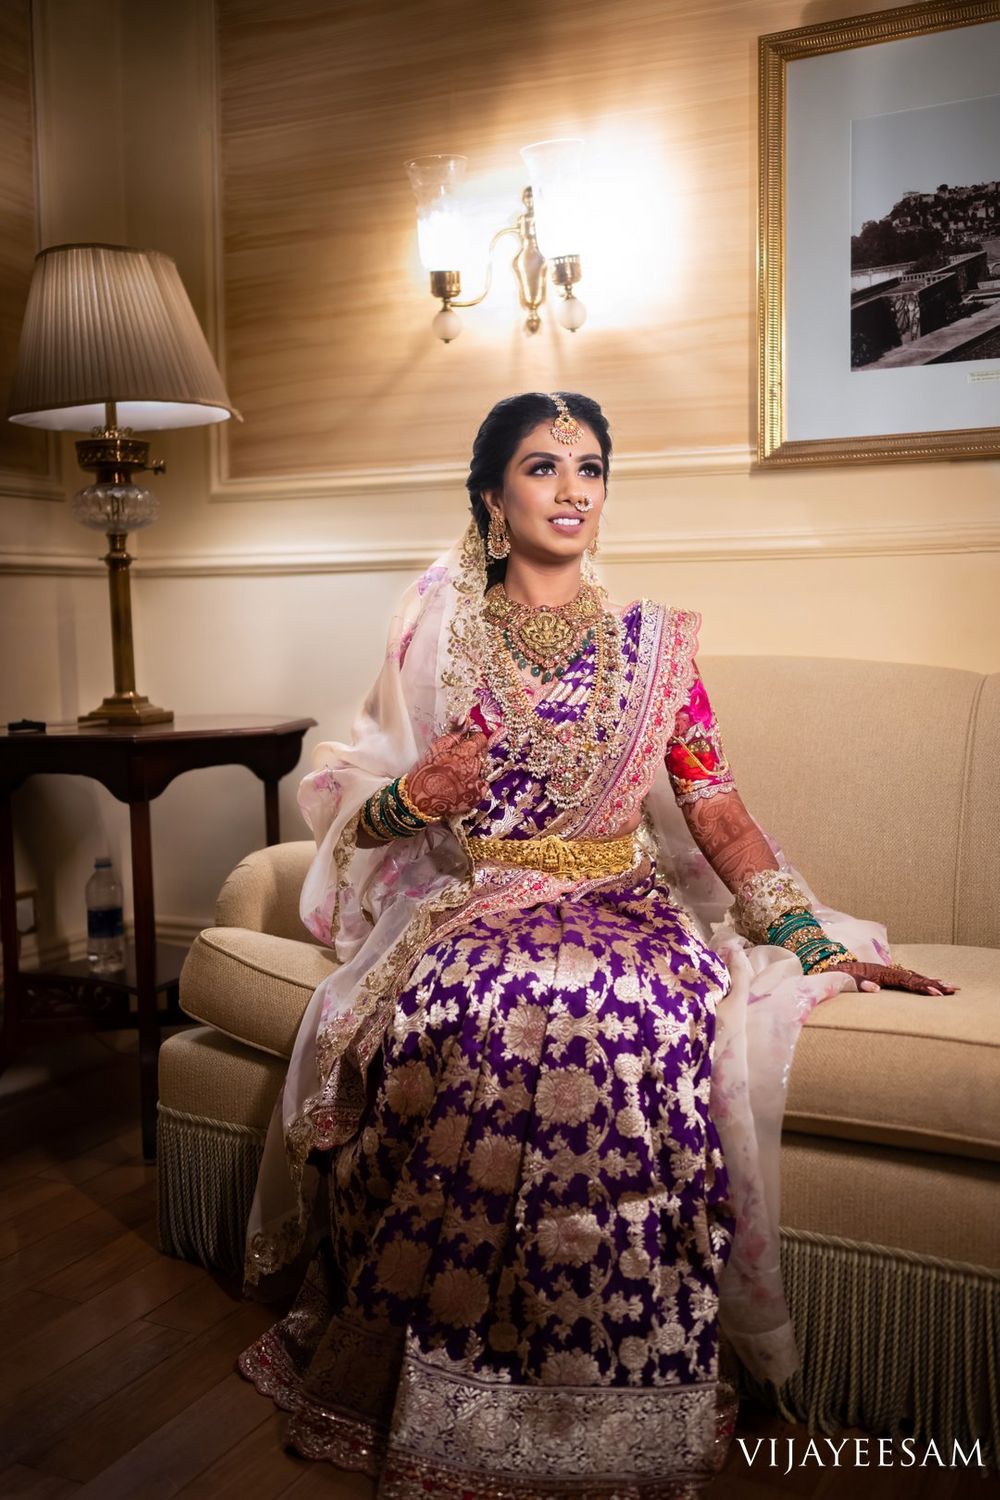 Photo of Regal South Indian bridal portrait.